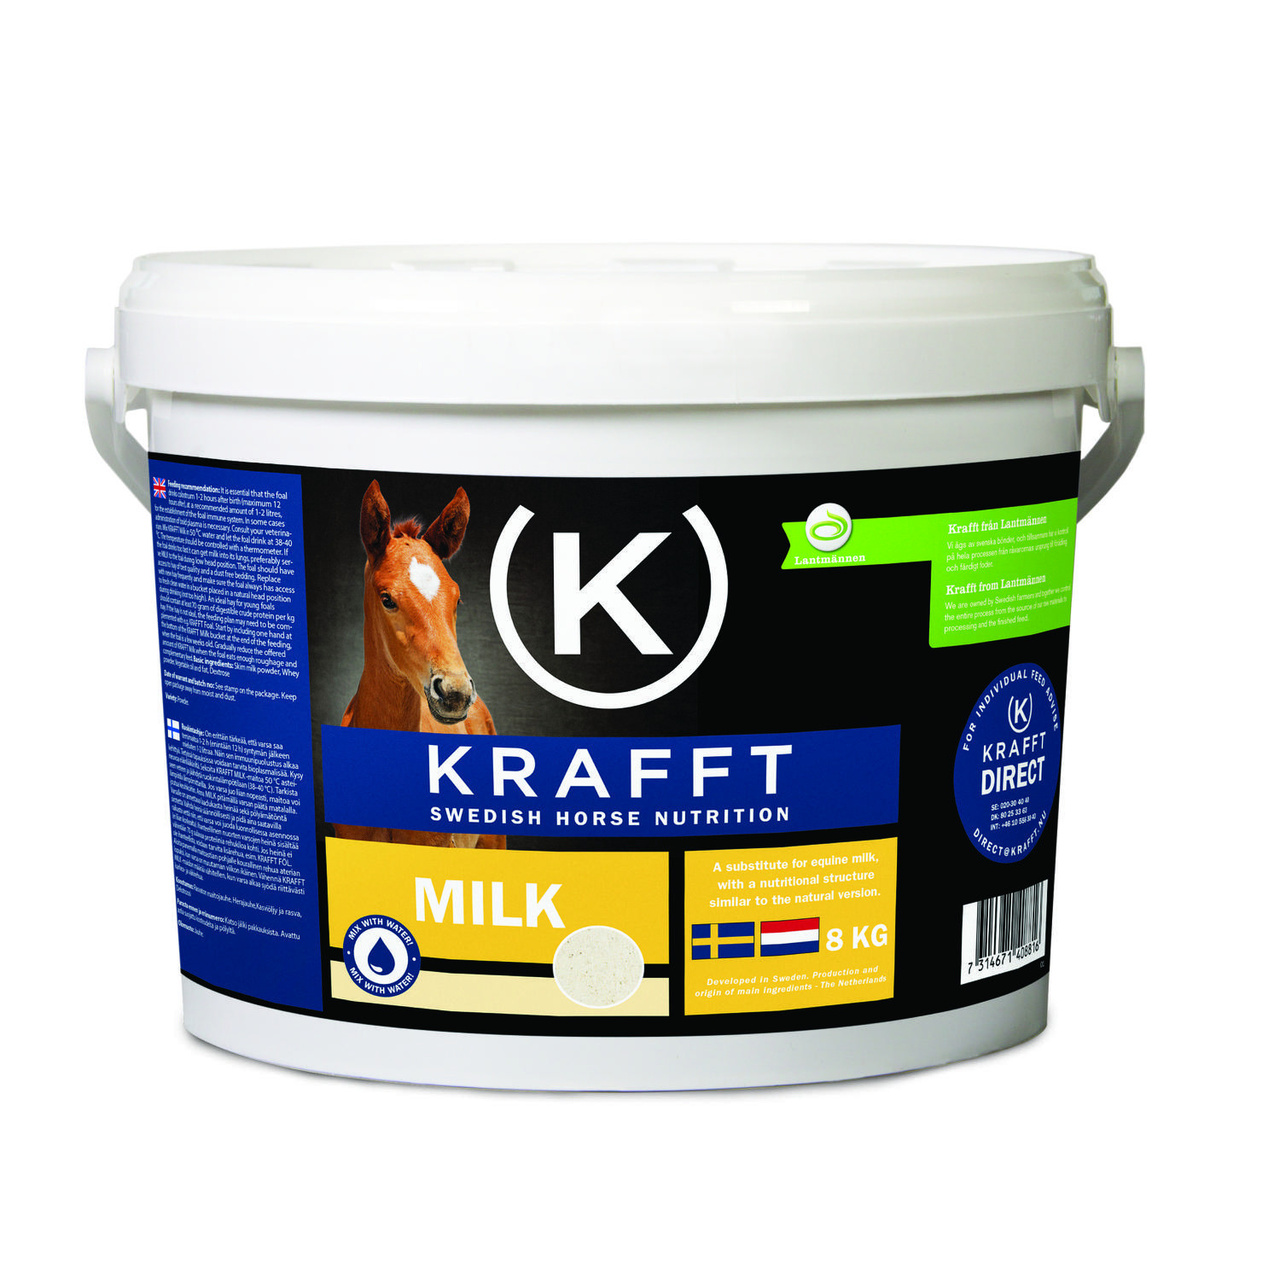 Krafft milk 5 kg